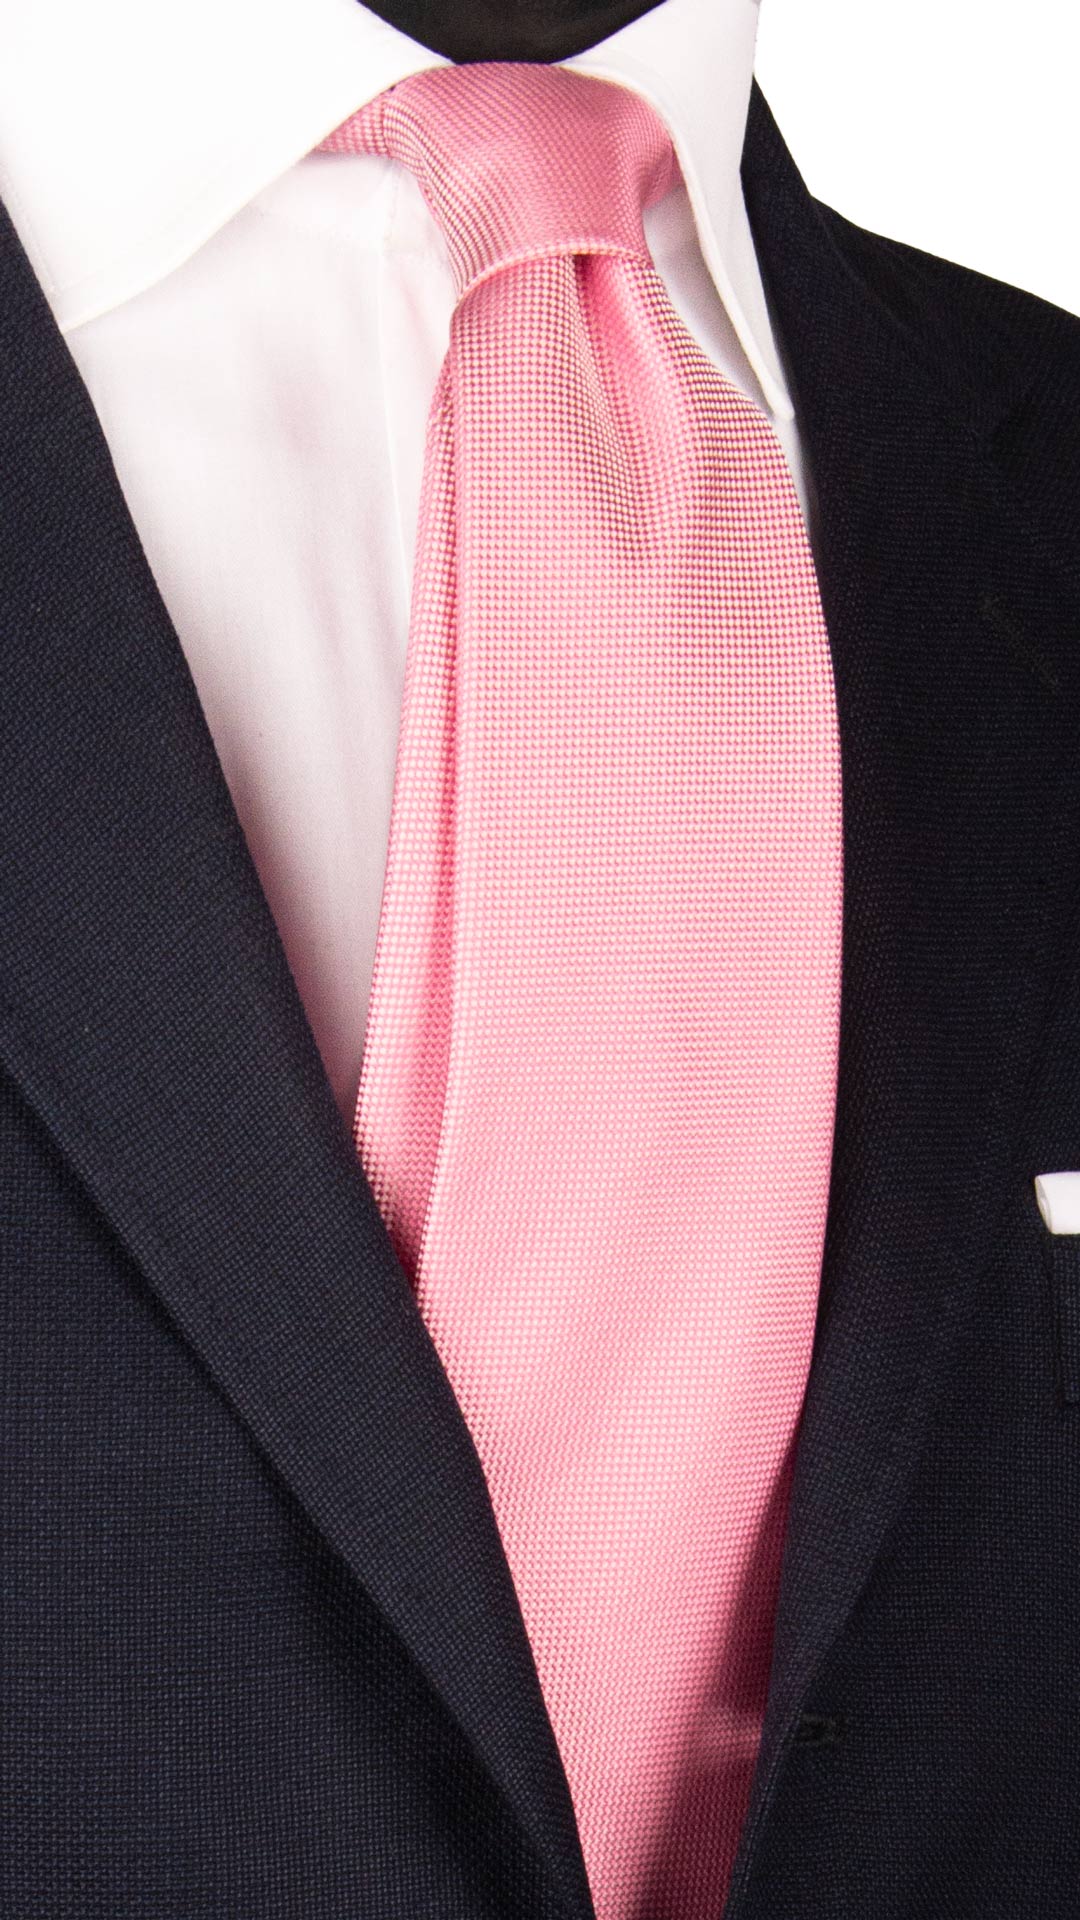 Cravatta di Seta Rosa Tinta Unita 7031 Made in Italy Graffeo Cravatte